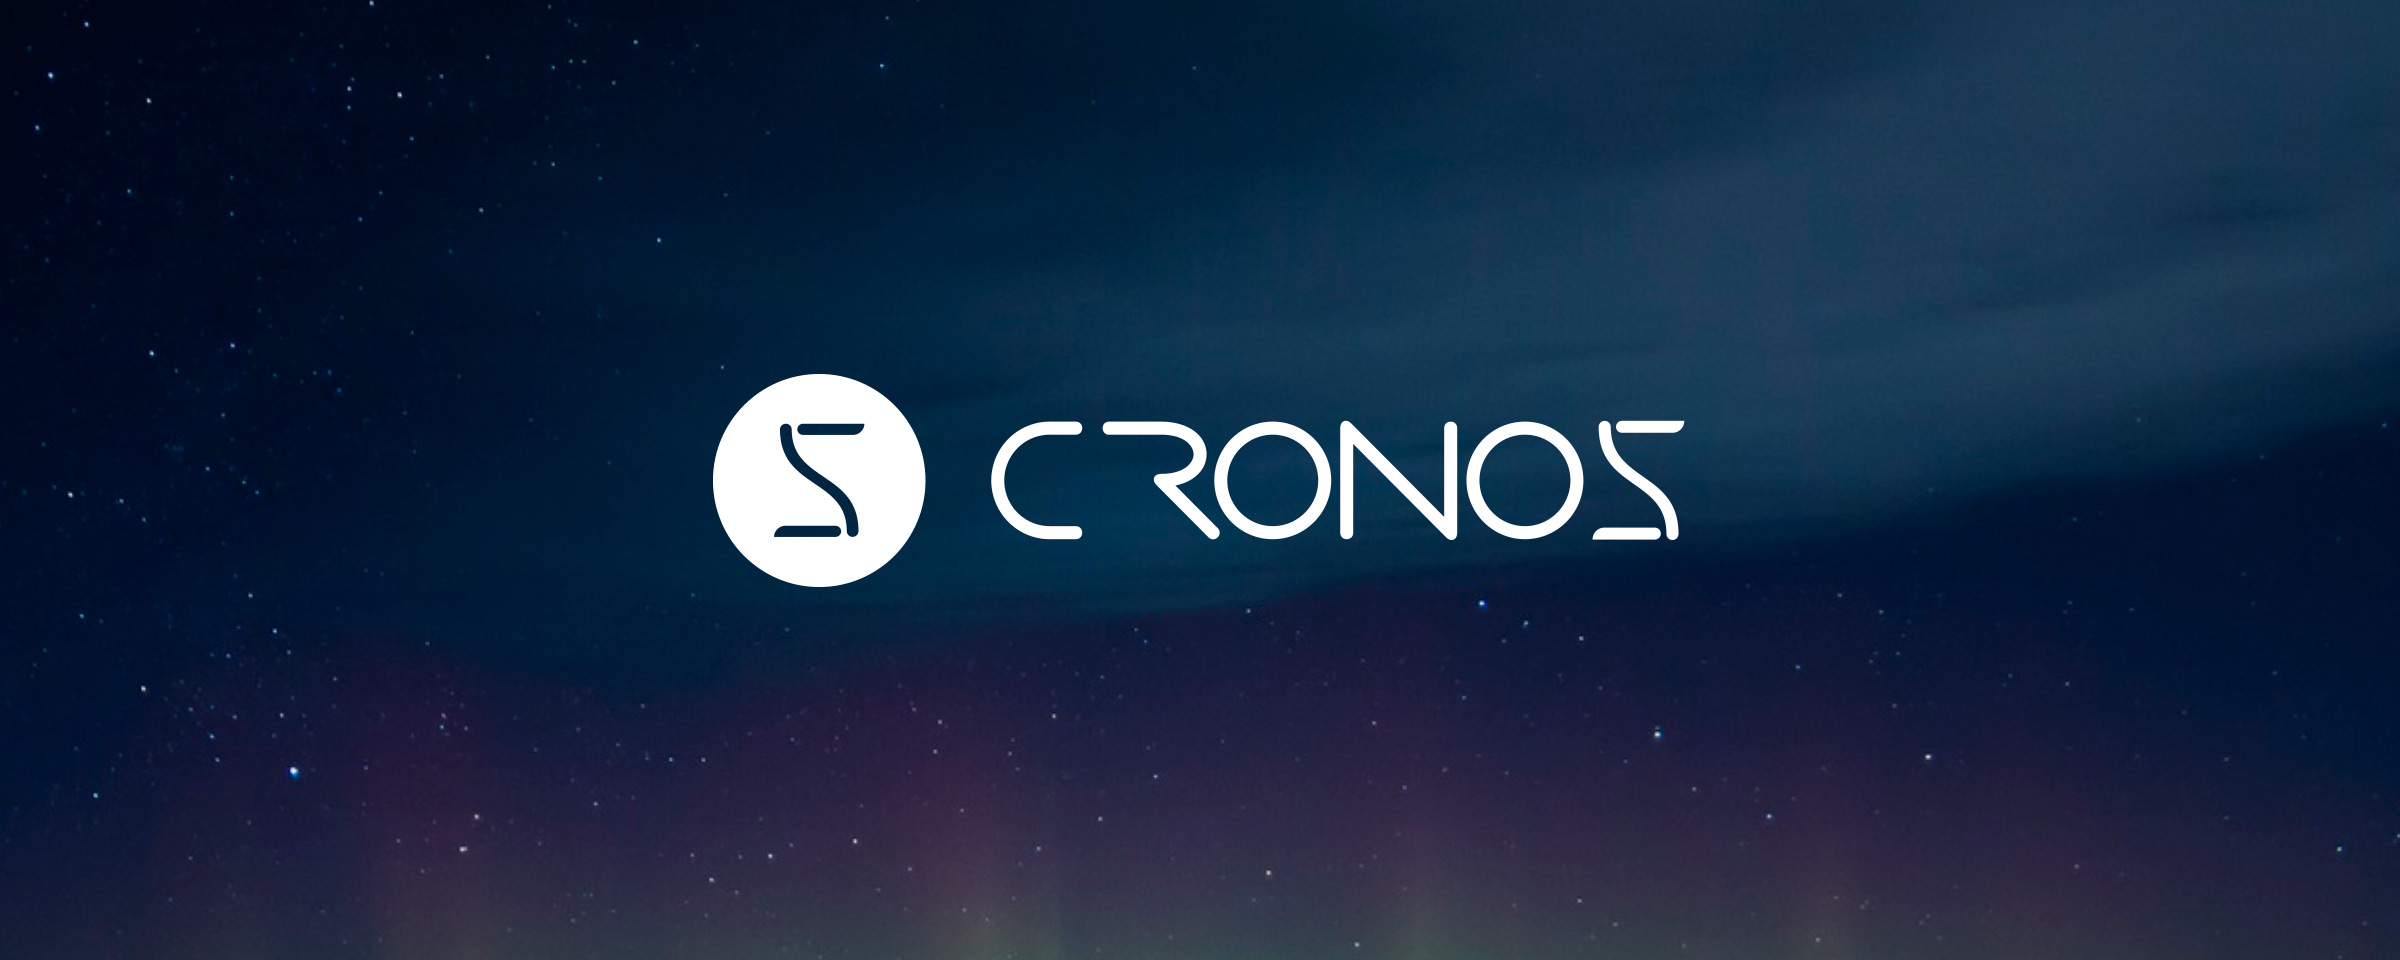 Cronos Brand Process 4